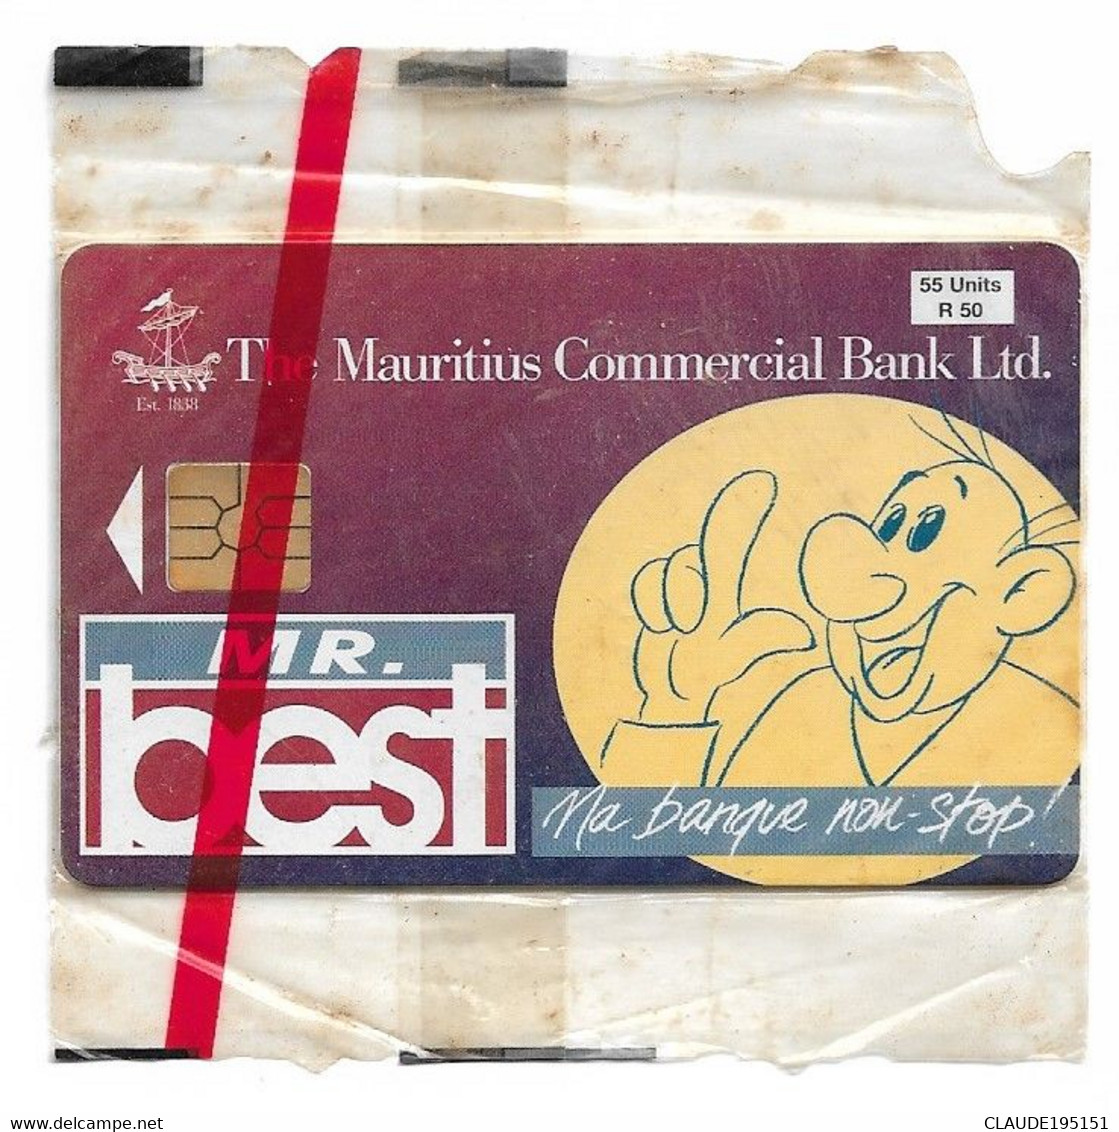 THE MAURITIUS COMMERCIAL BANK LTD   55 UNITS   R50 - Mauritius